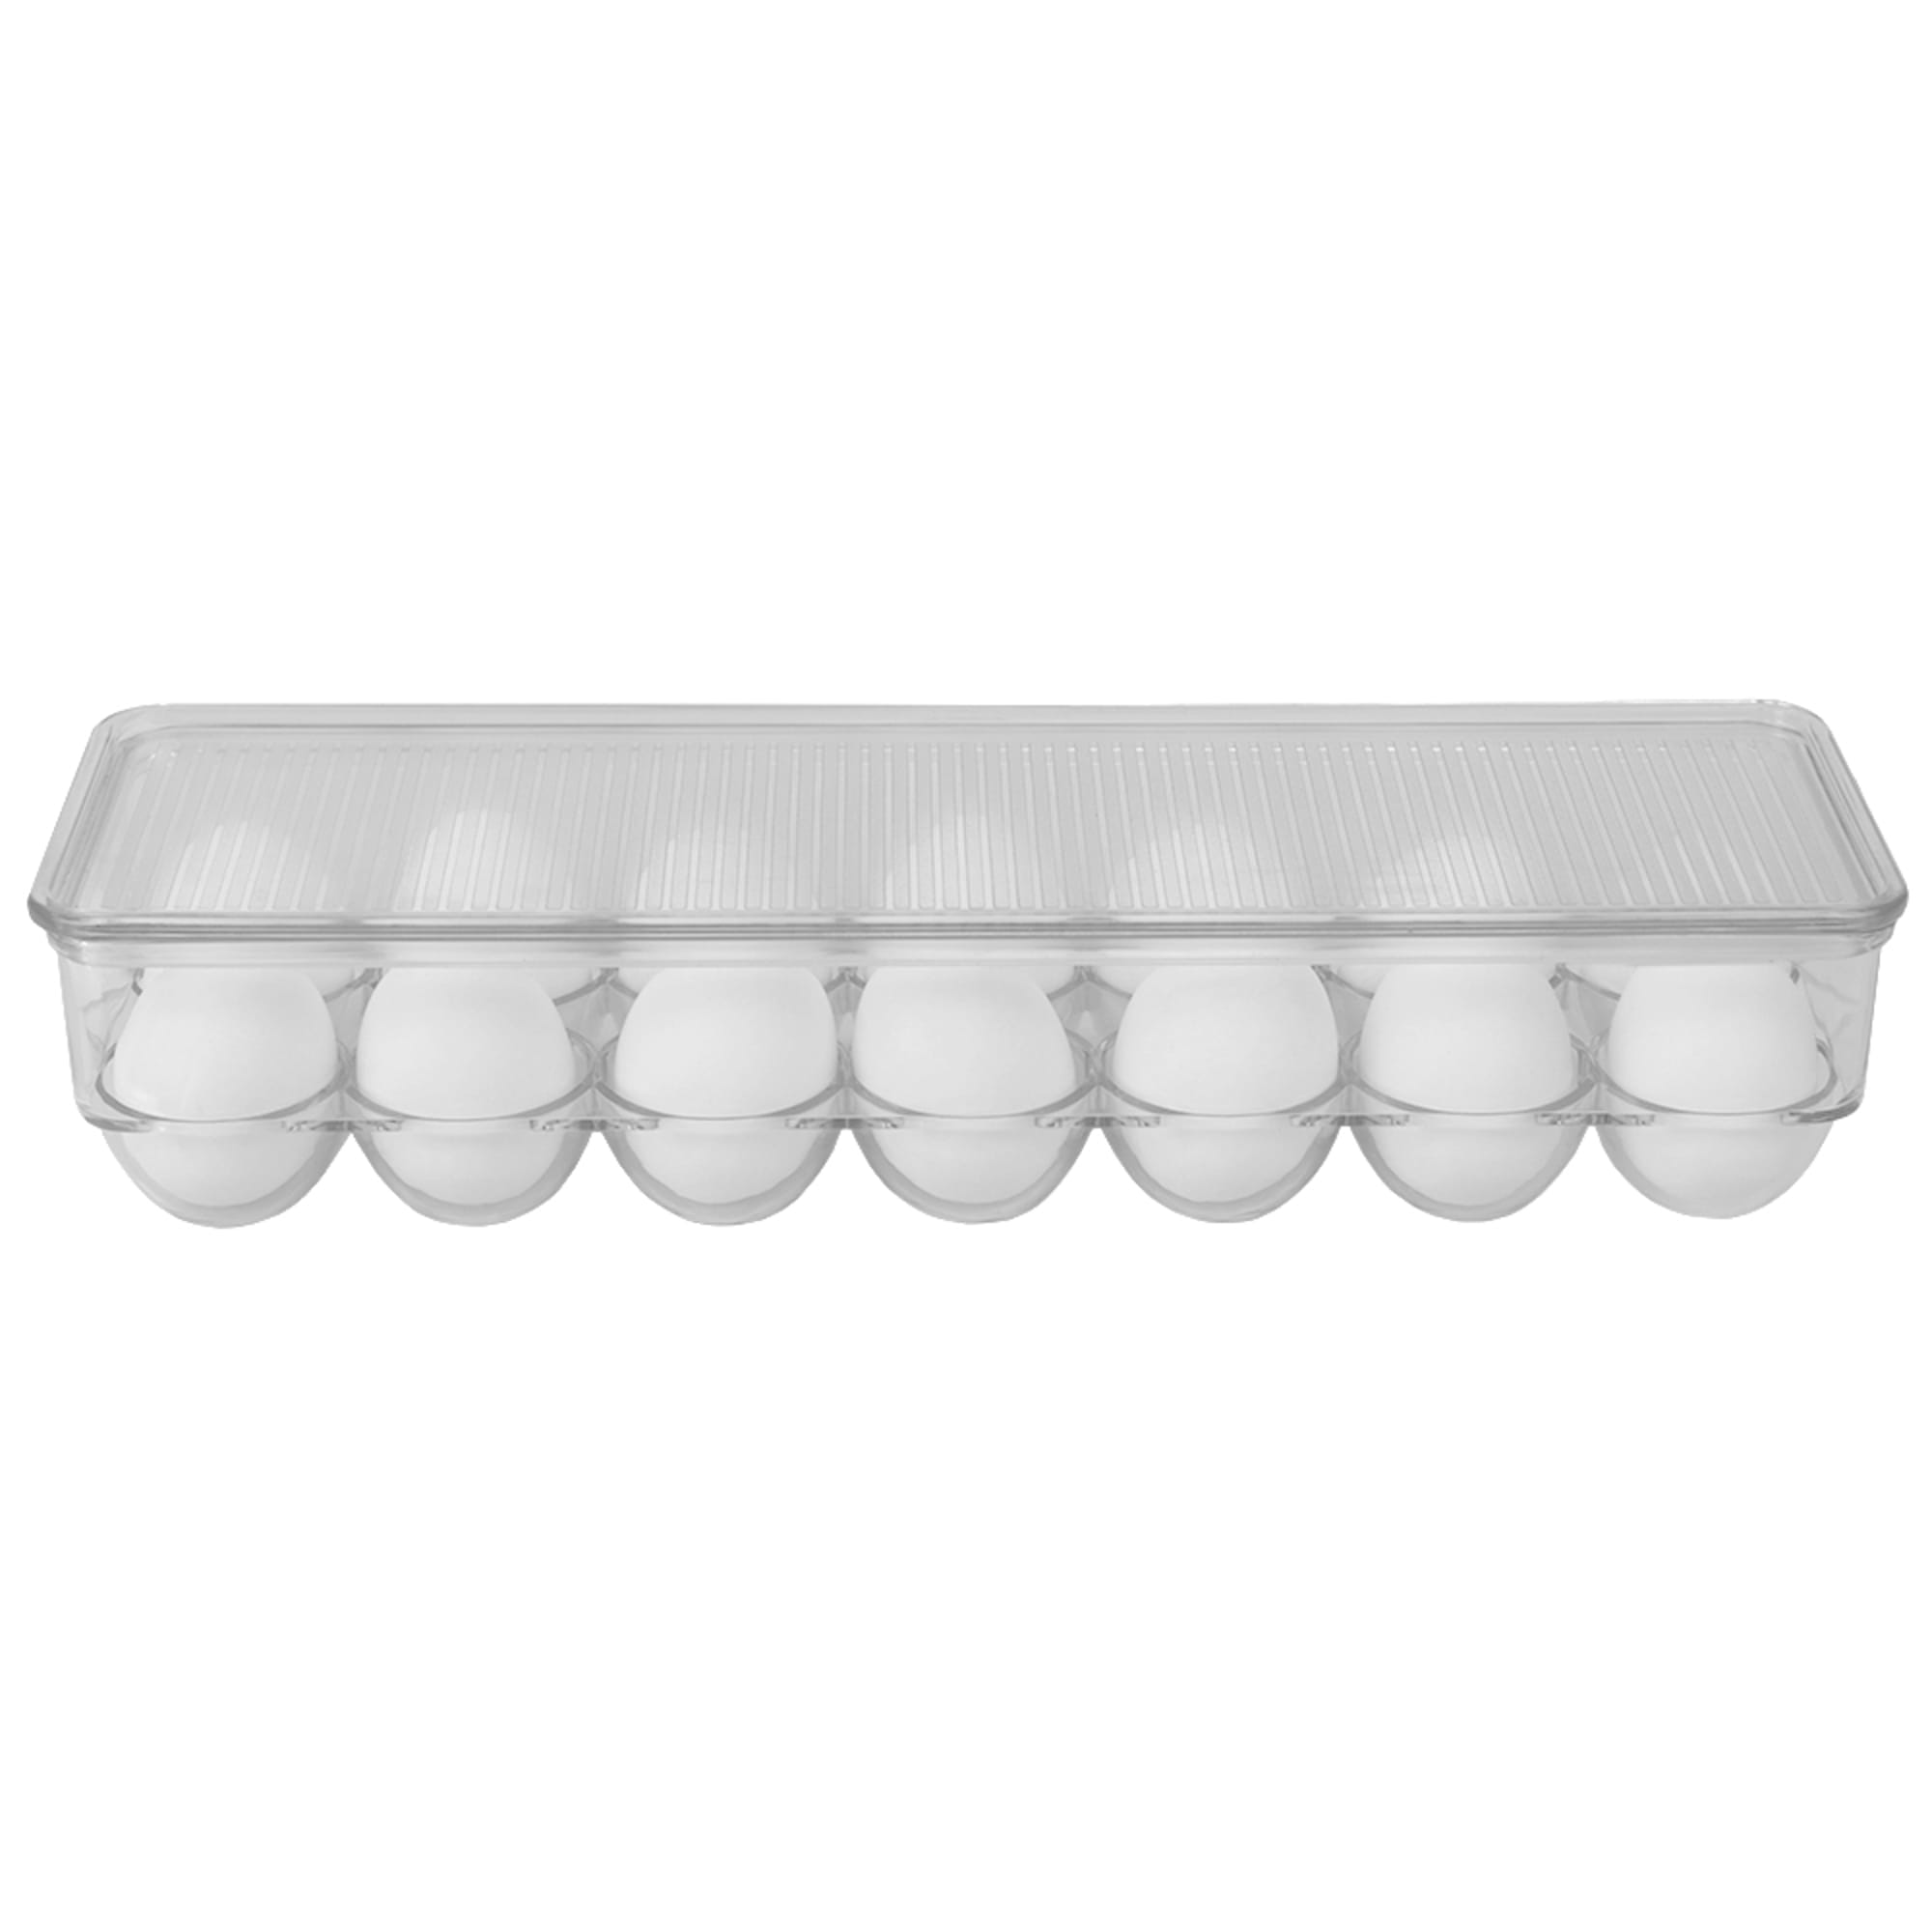 Home Basics 14 Egg Plastic Holder with Lid, Plastic $4.00 EACH, CASE PACK OF 12